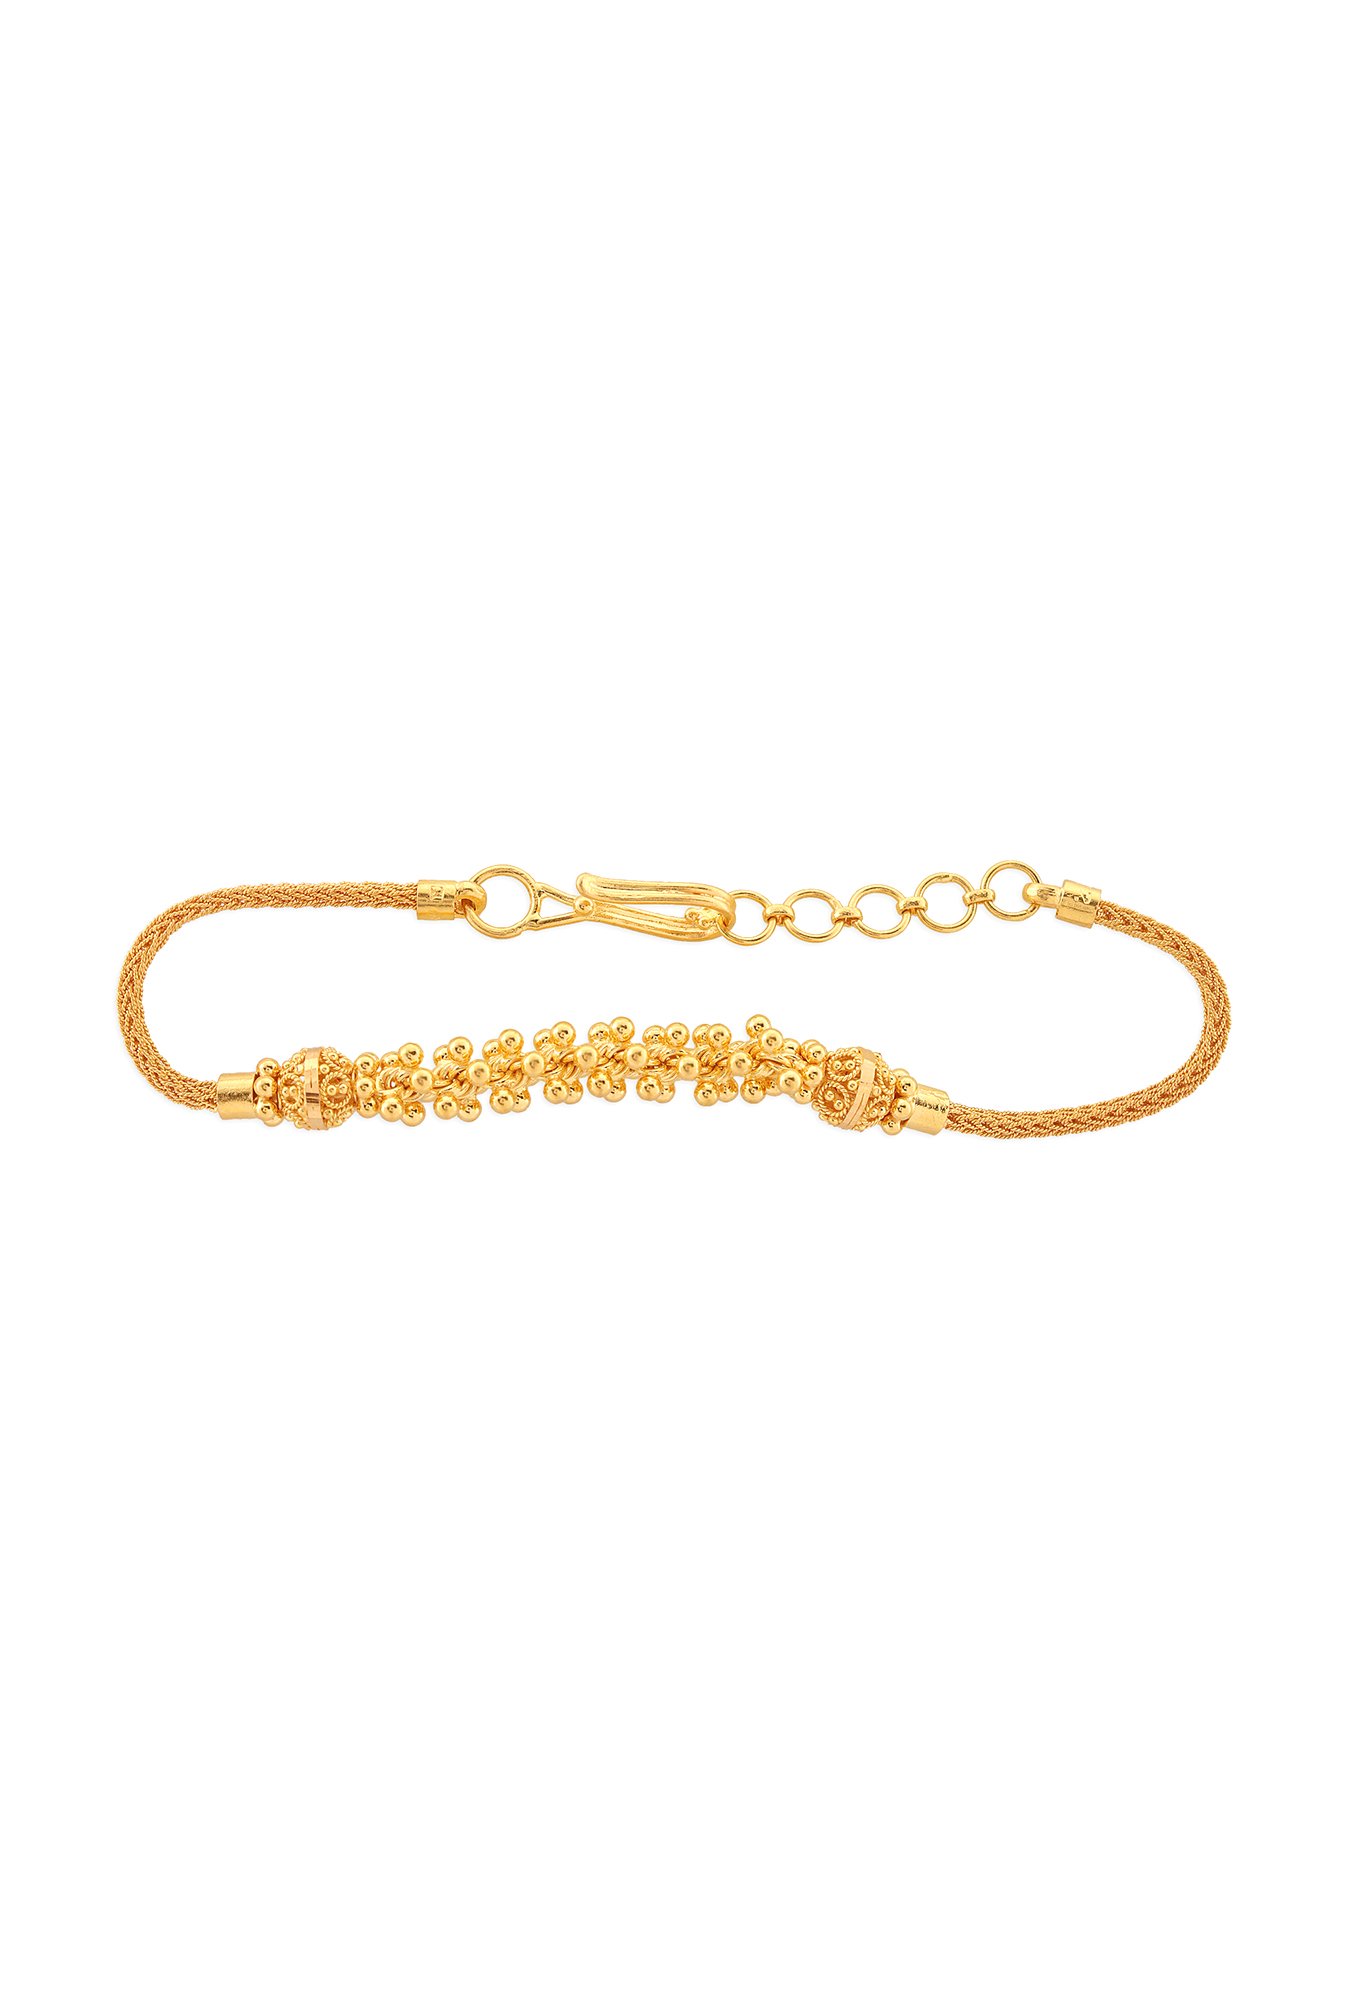 22 Carat Gold Thick Greek Cuff Bracelet